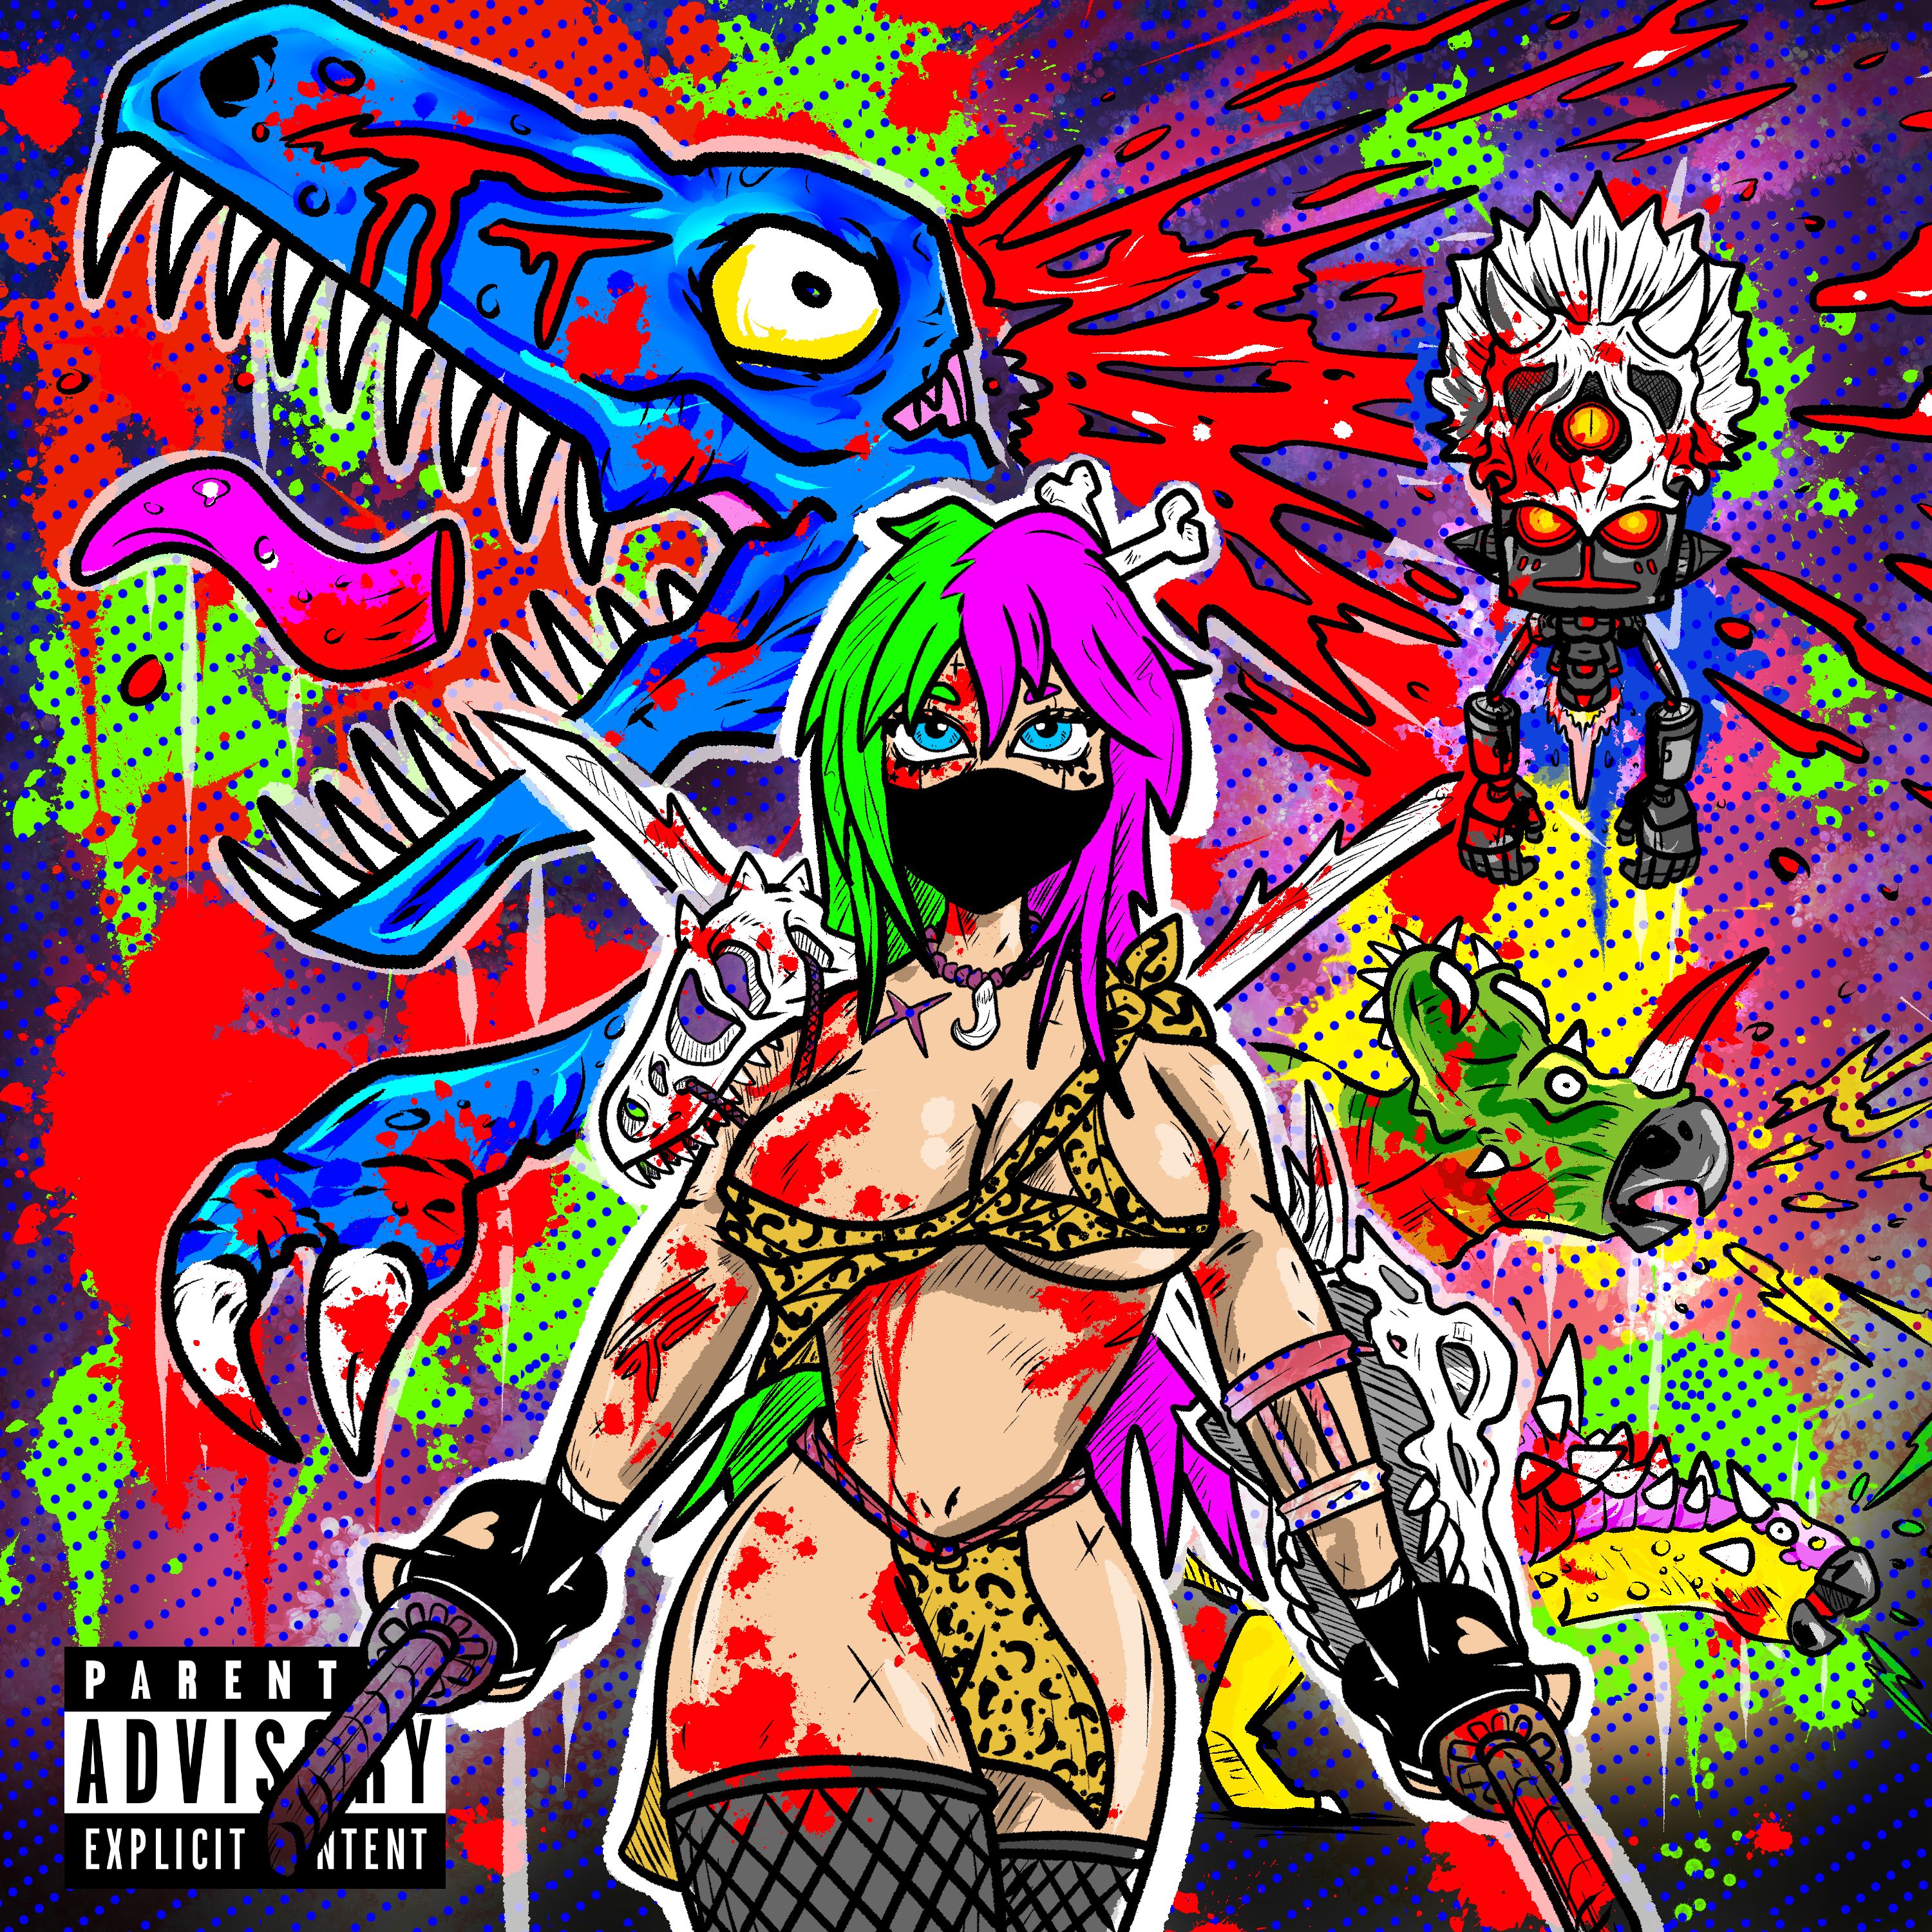 डाउनलोड करा From Myspace Deathcore To Screamo Rap | Prod. NetuH